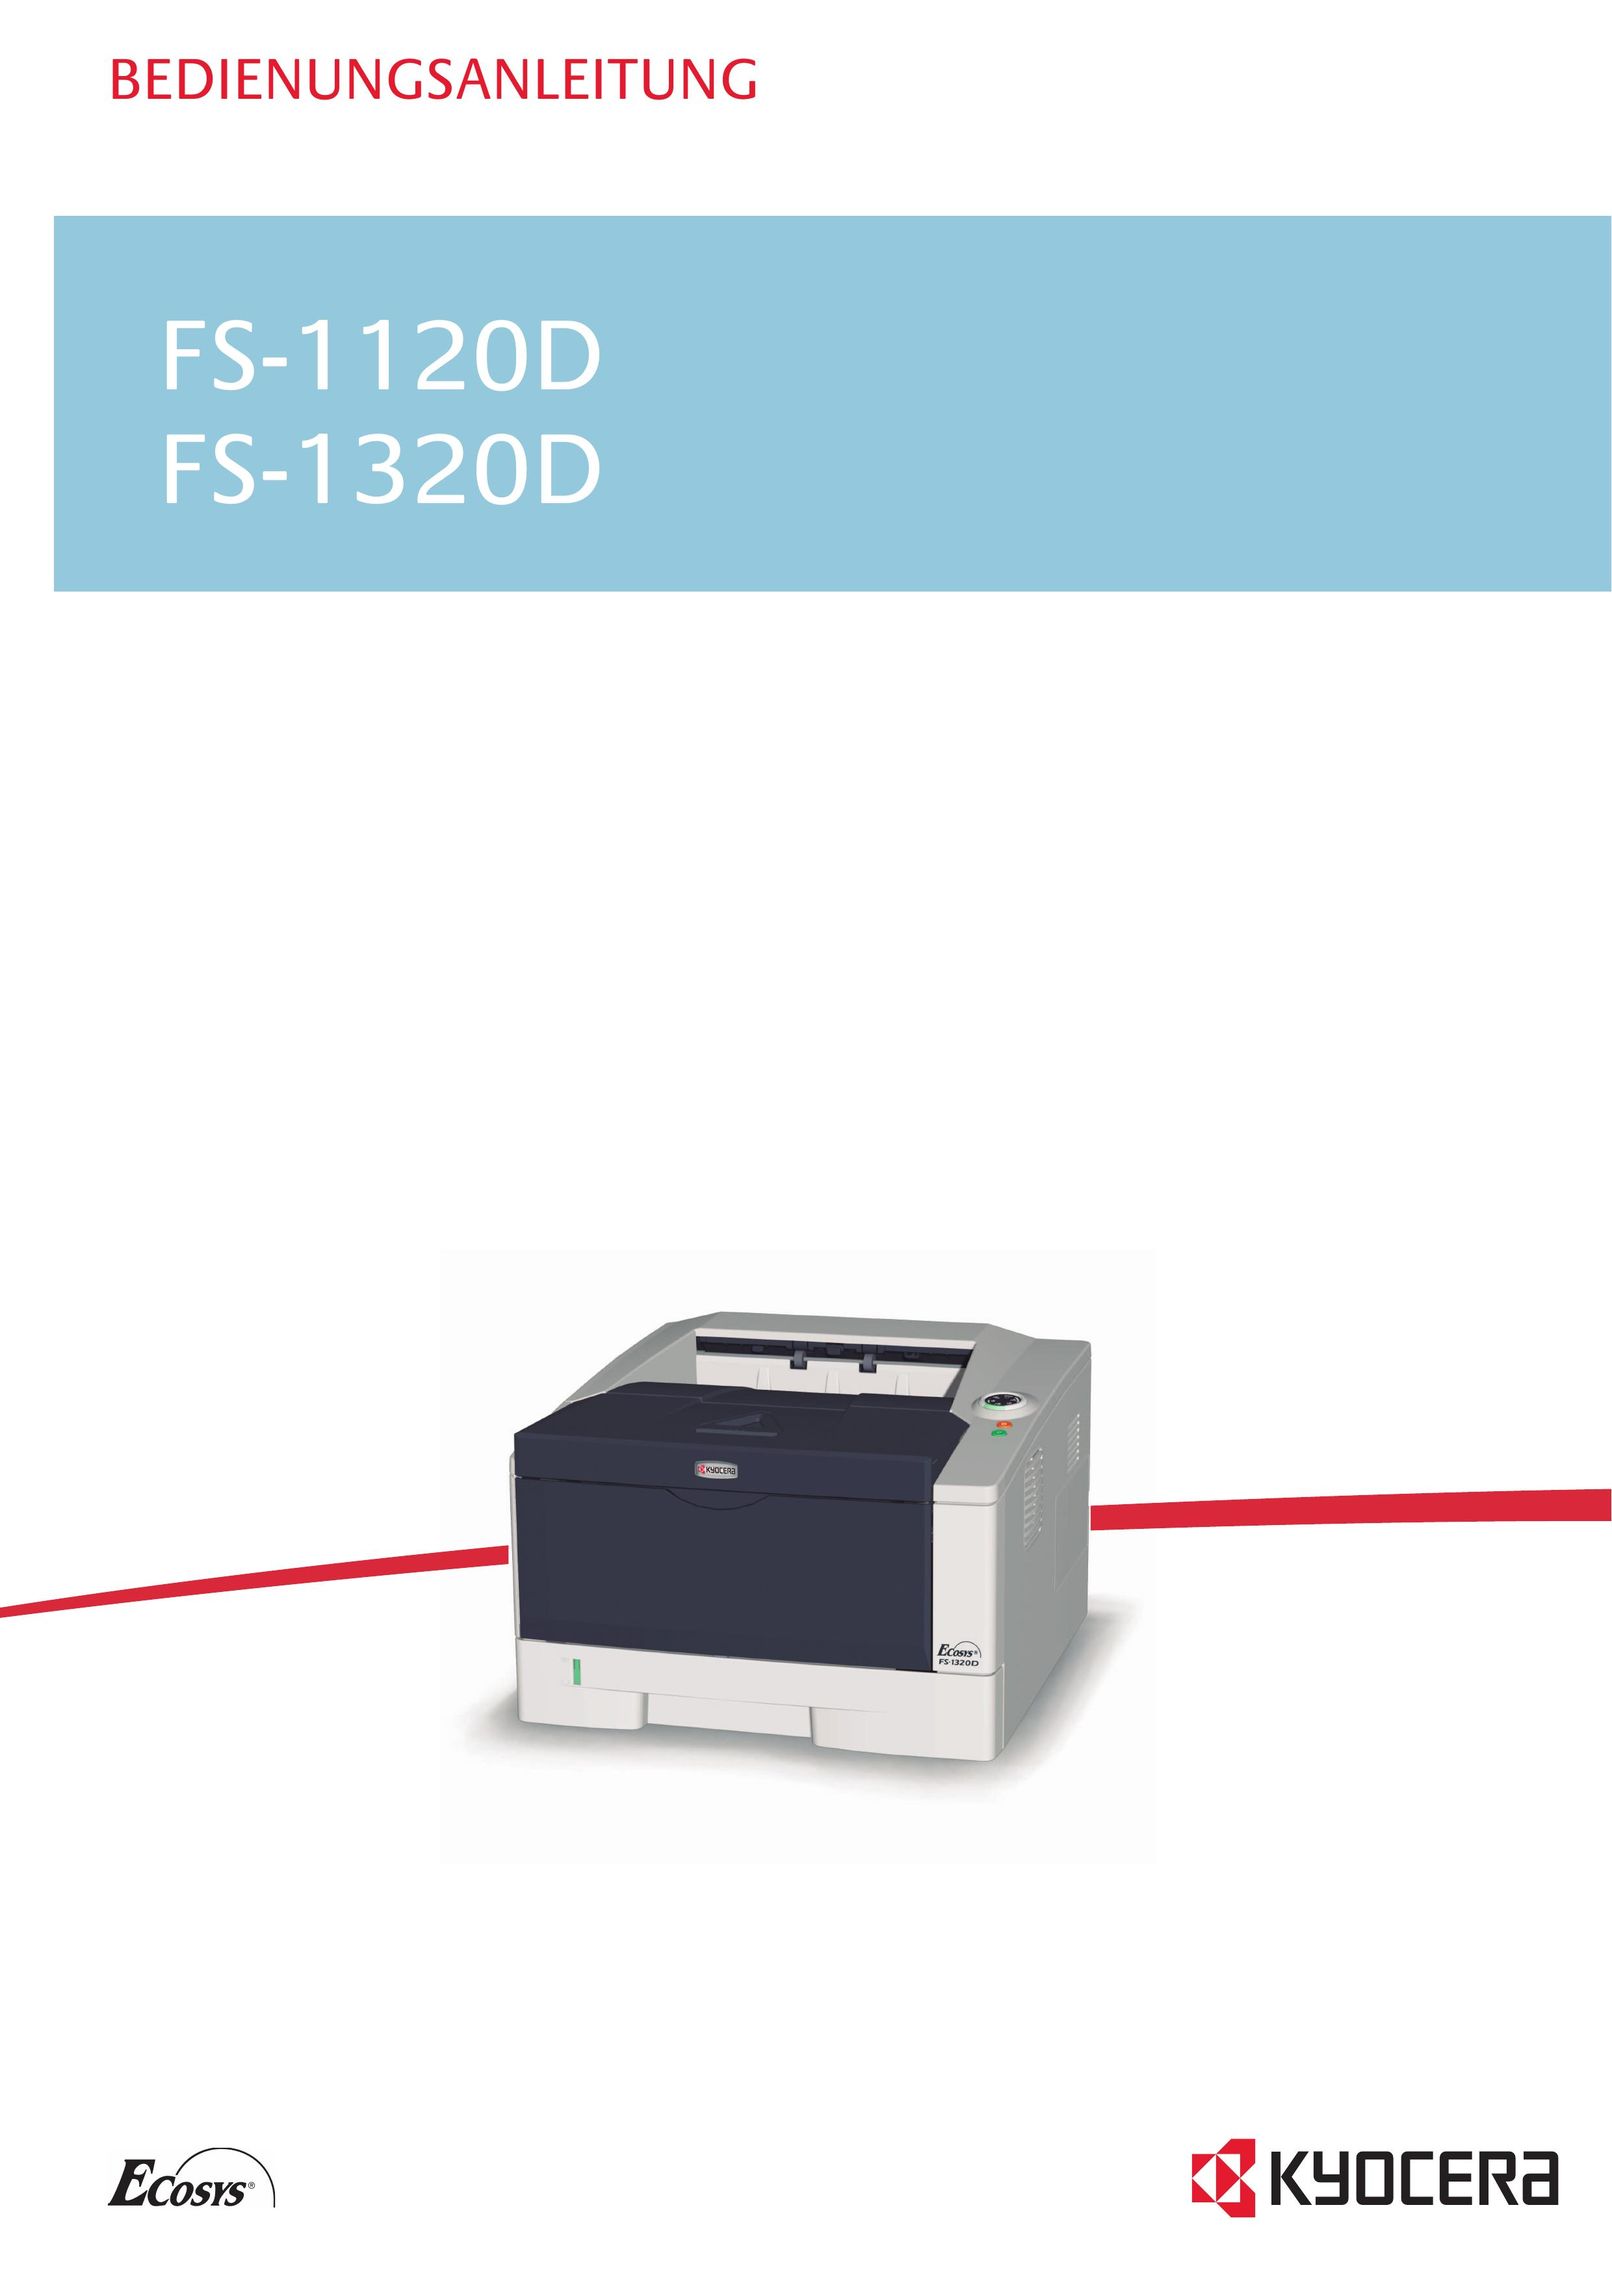 Kyocera FS-1320D Printer User Manual